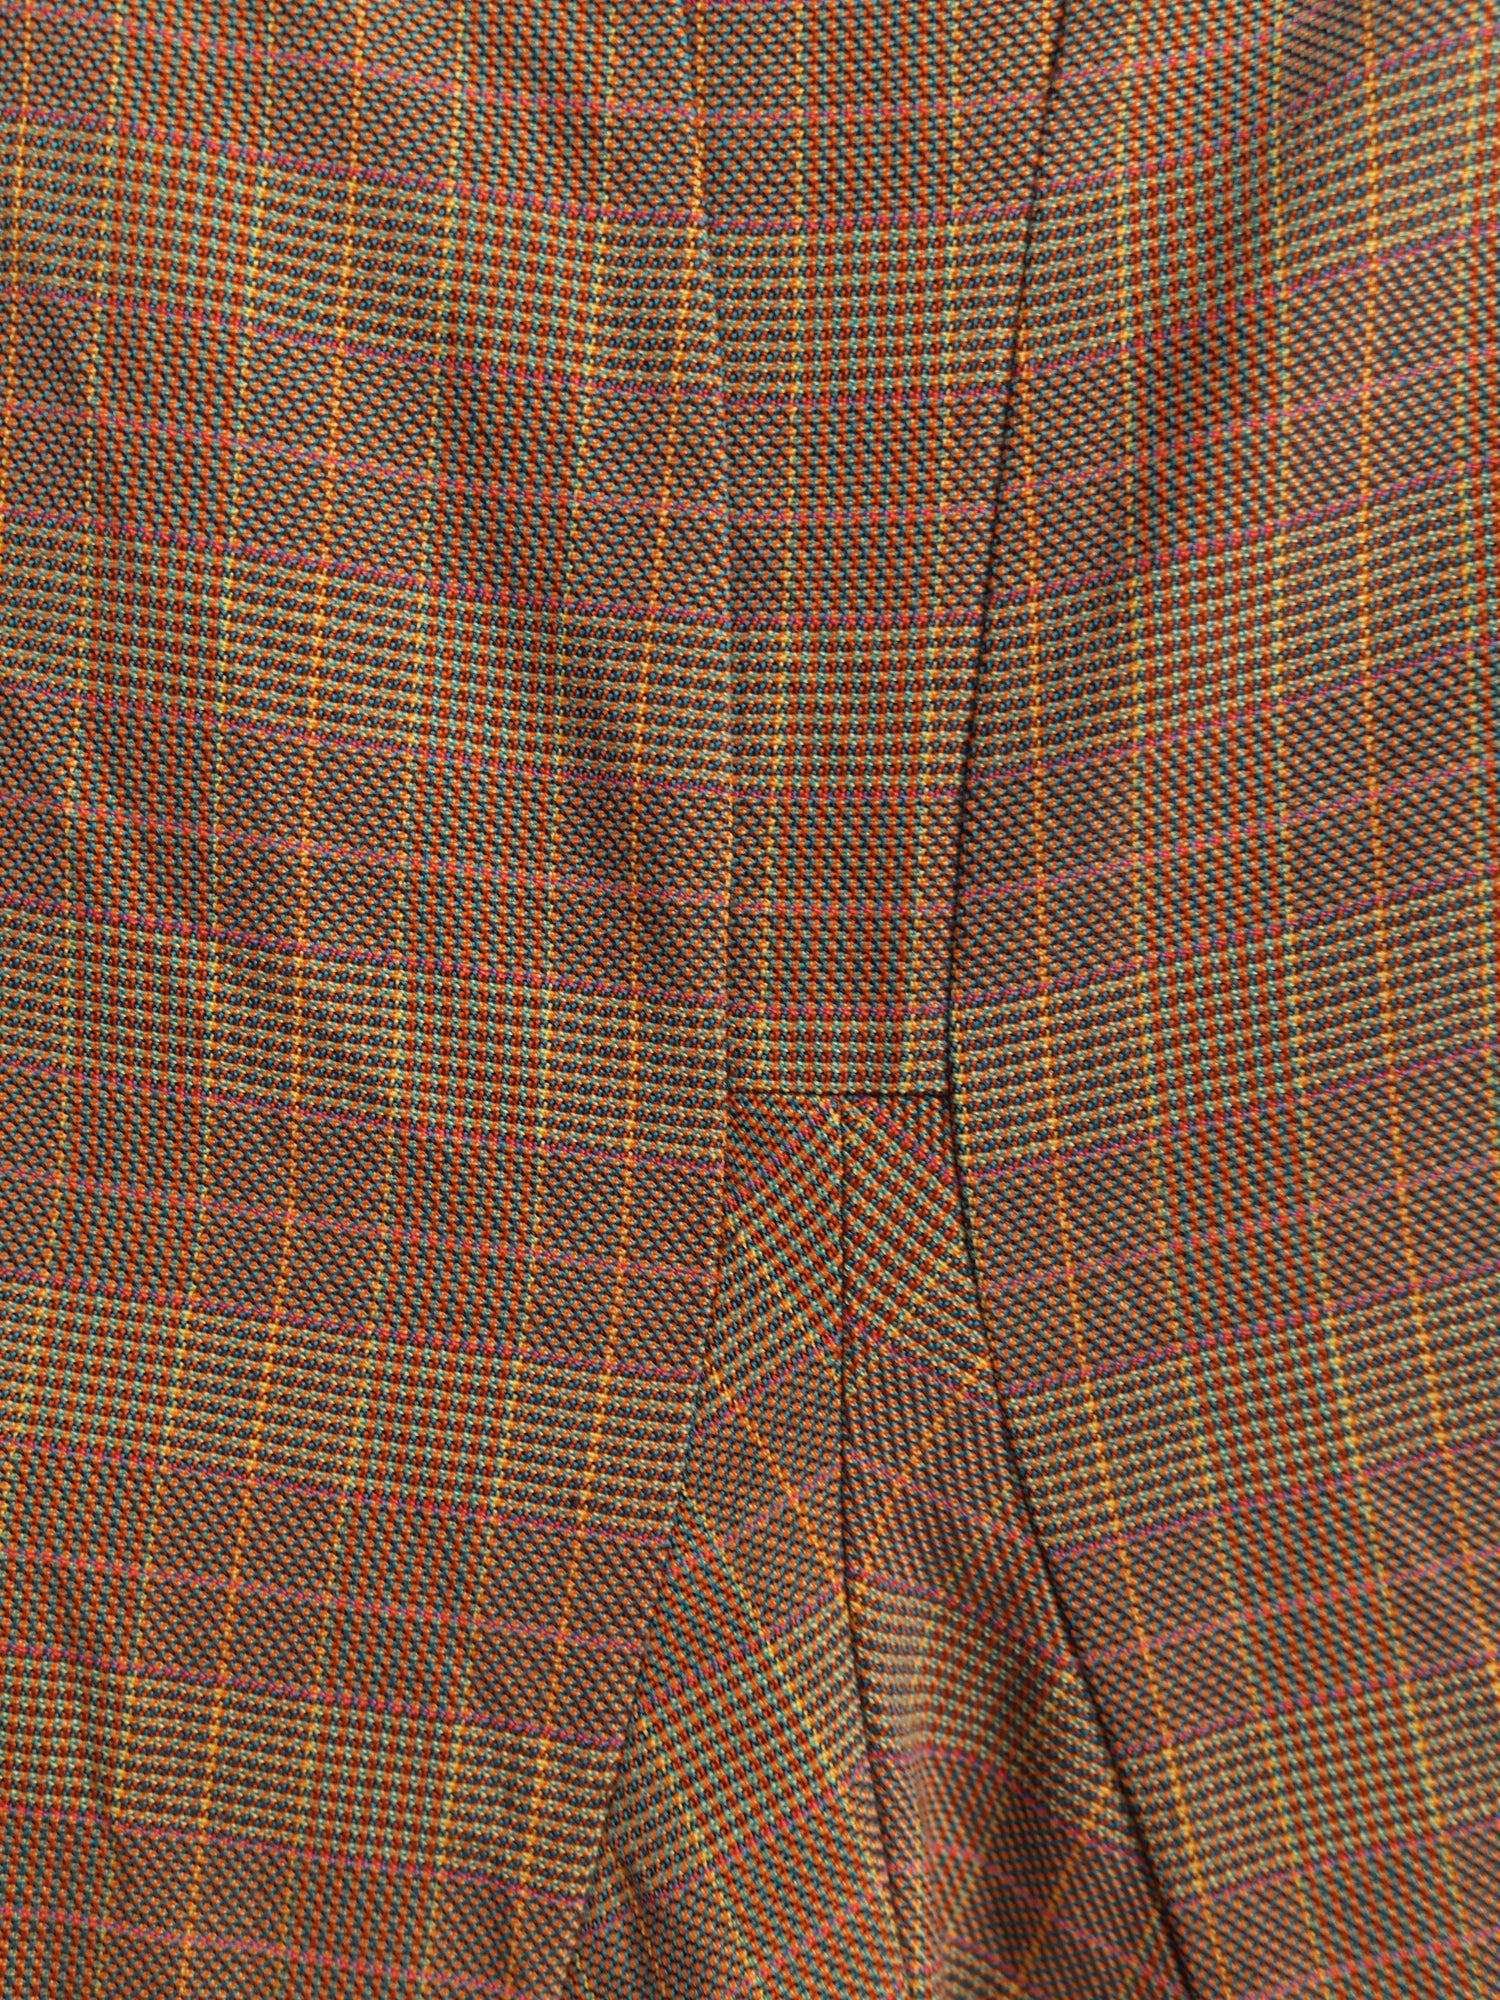 Junya Watanabe Comme des Garcons 1997 orange wool check curved seam skirt - M